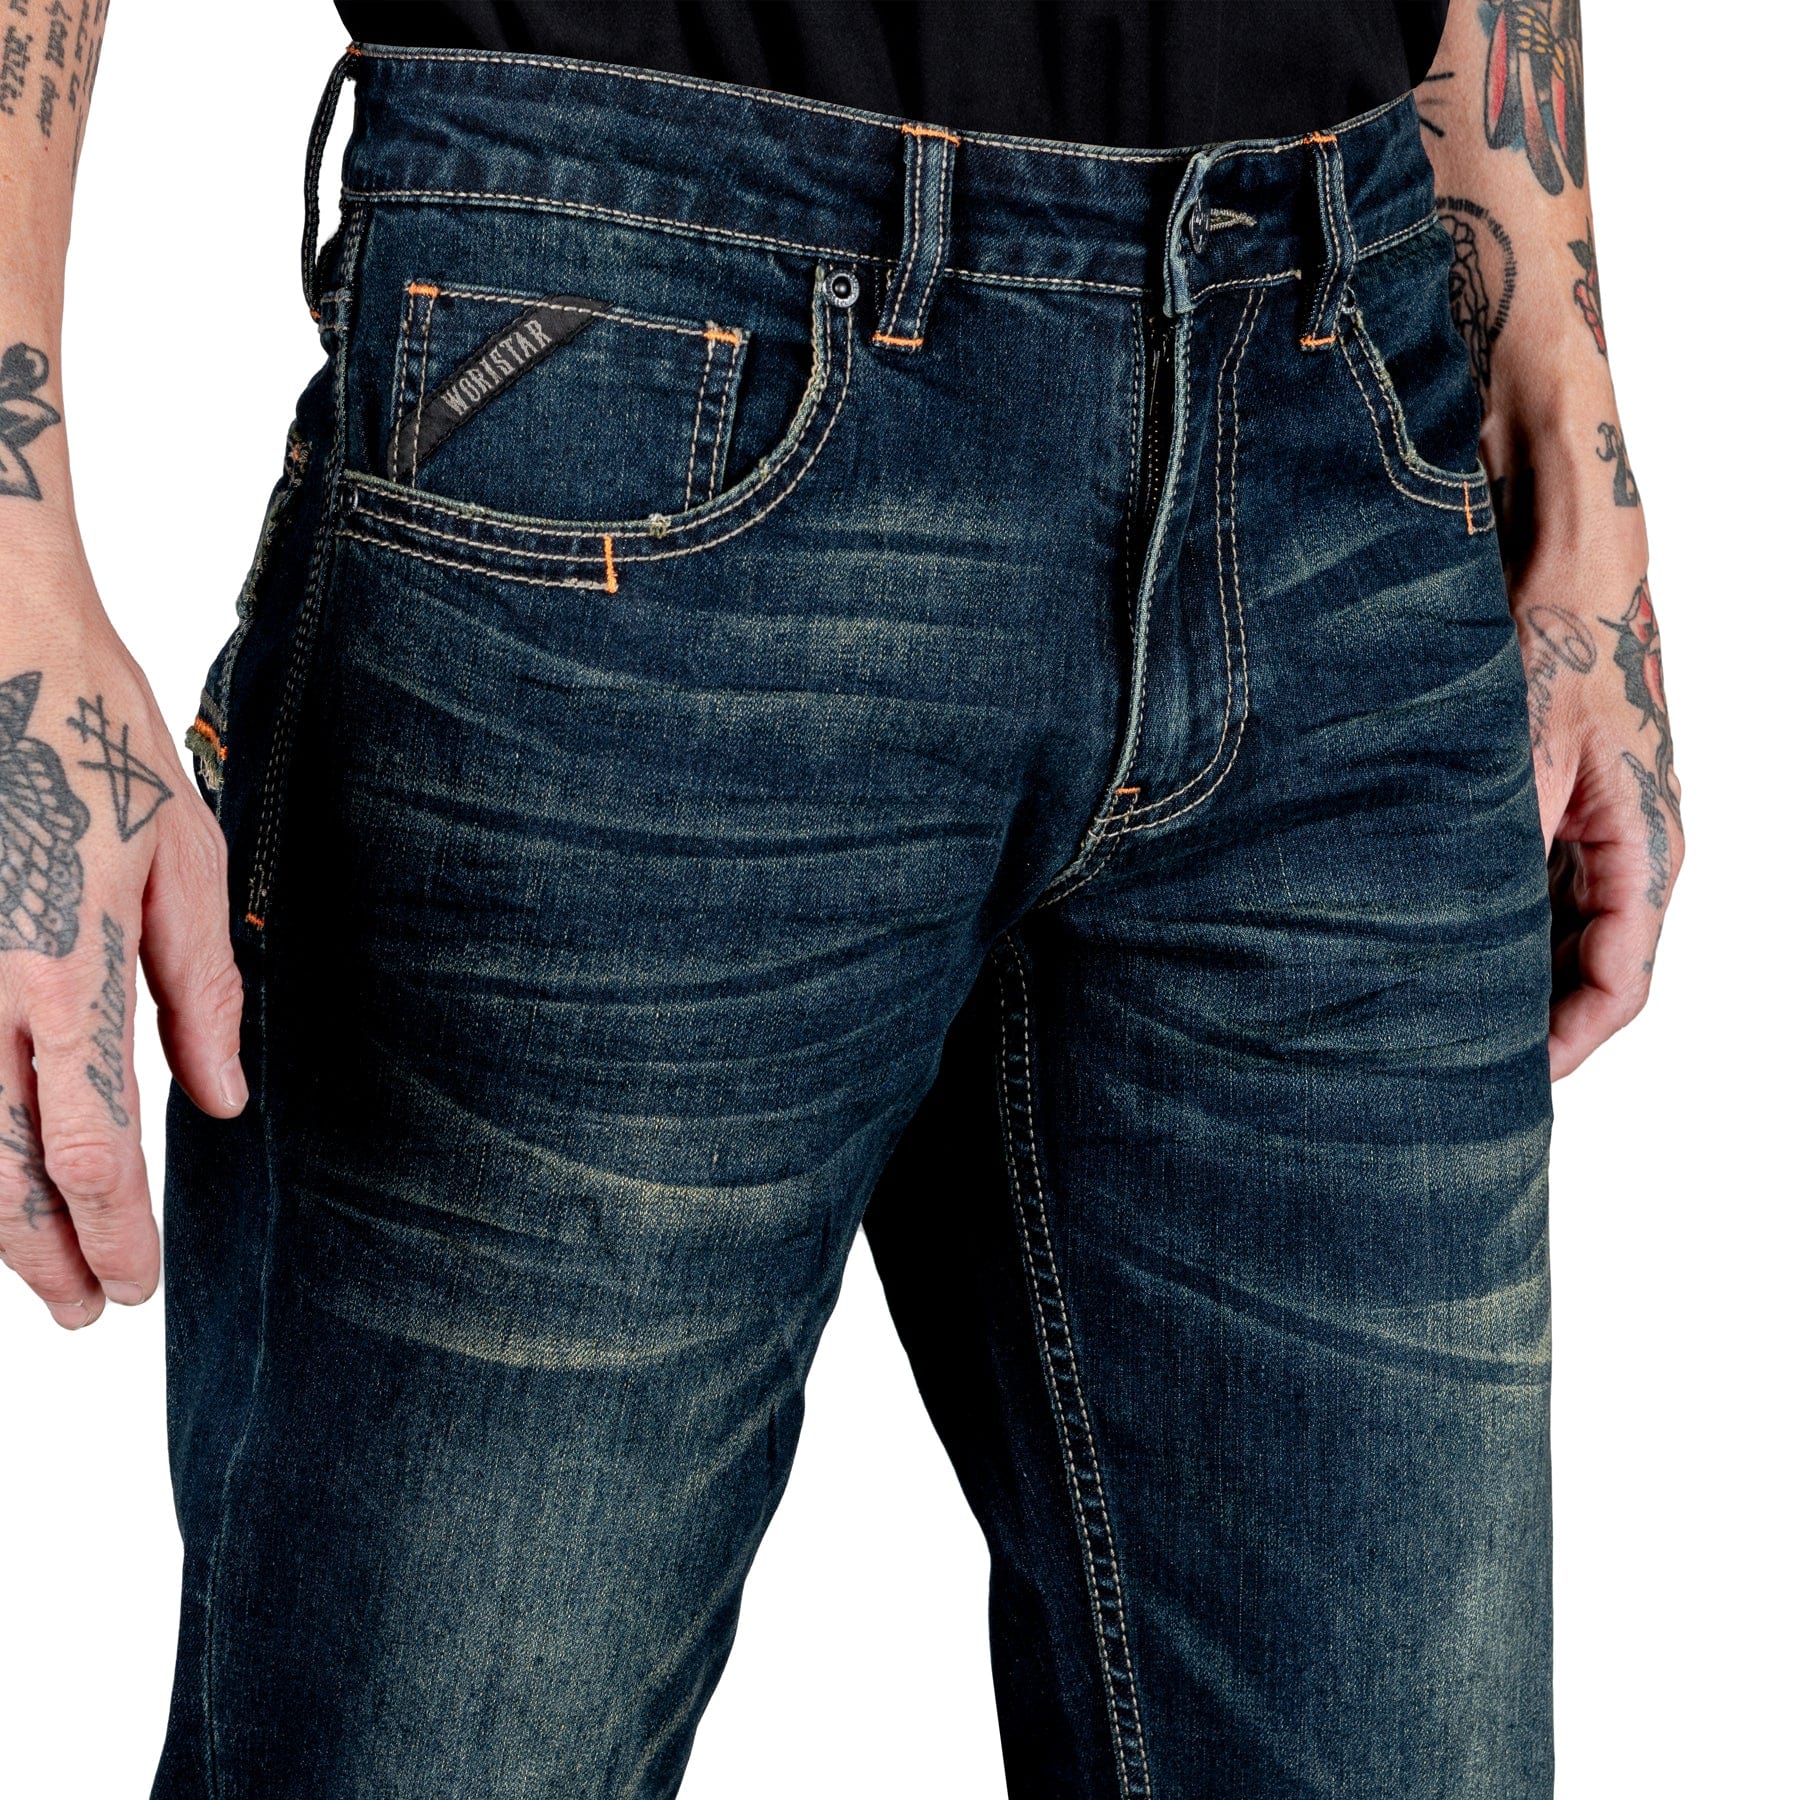 Essentials Collection Pants Trailblazer Jeans - Midnight Blue